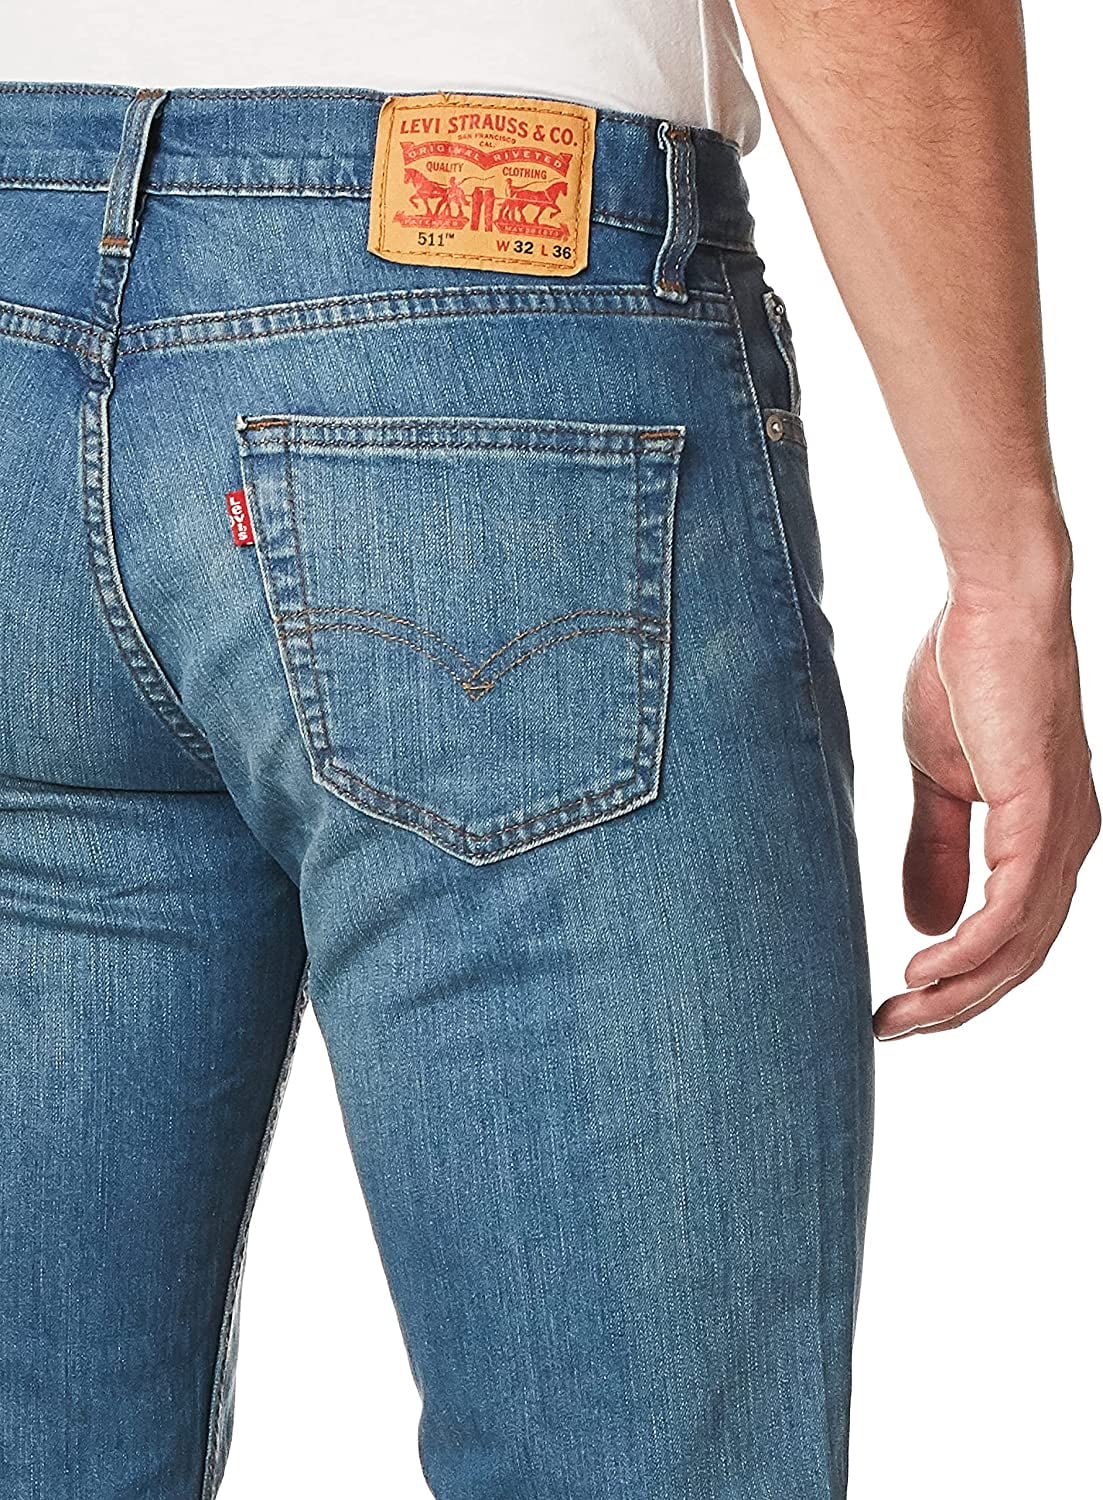 toezicht houden op Hoes Getand Levi's Men's 511 Slim Fit Jeans - Walmart.com